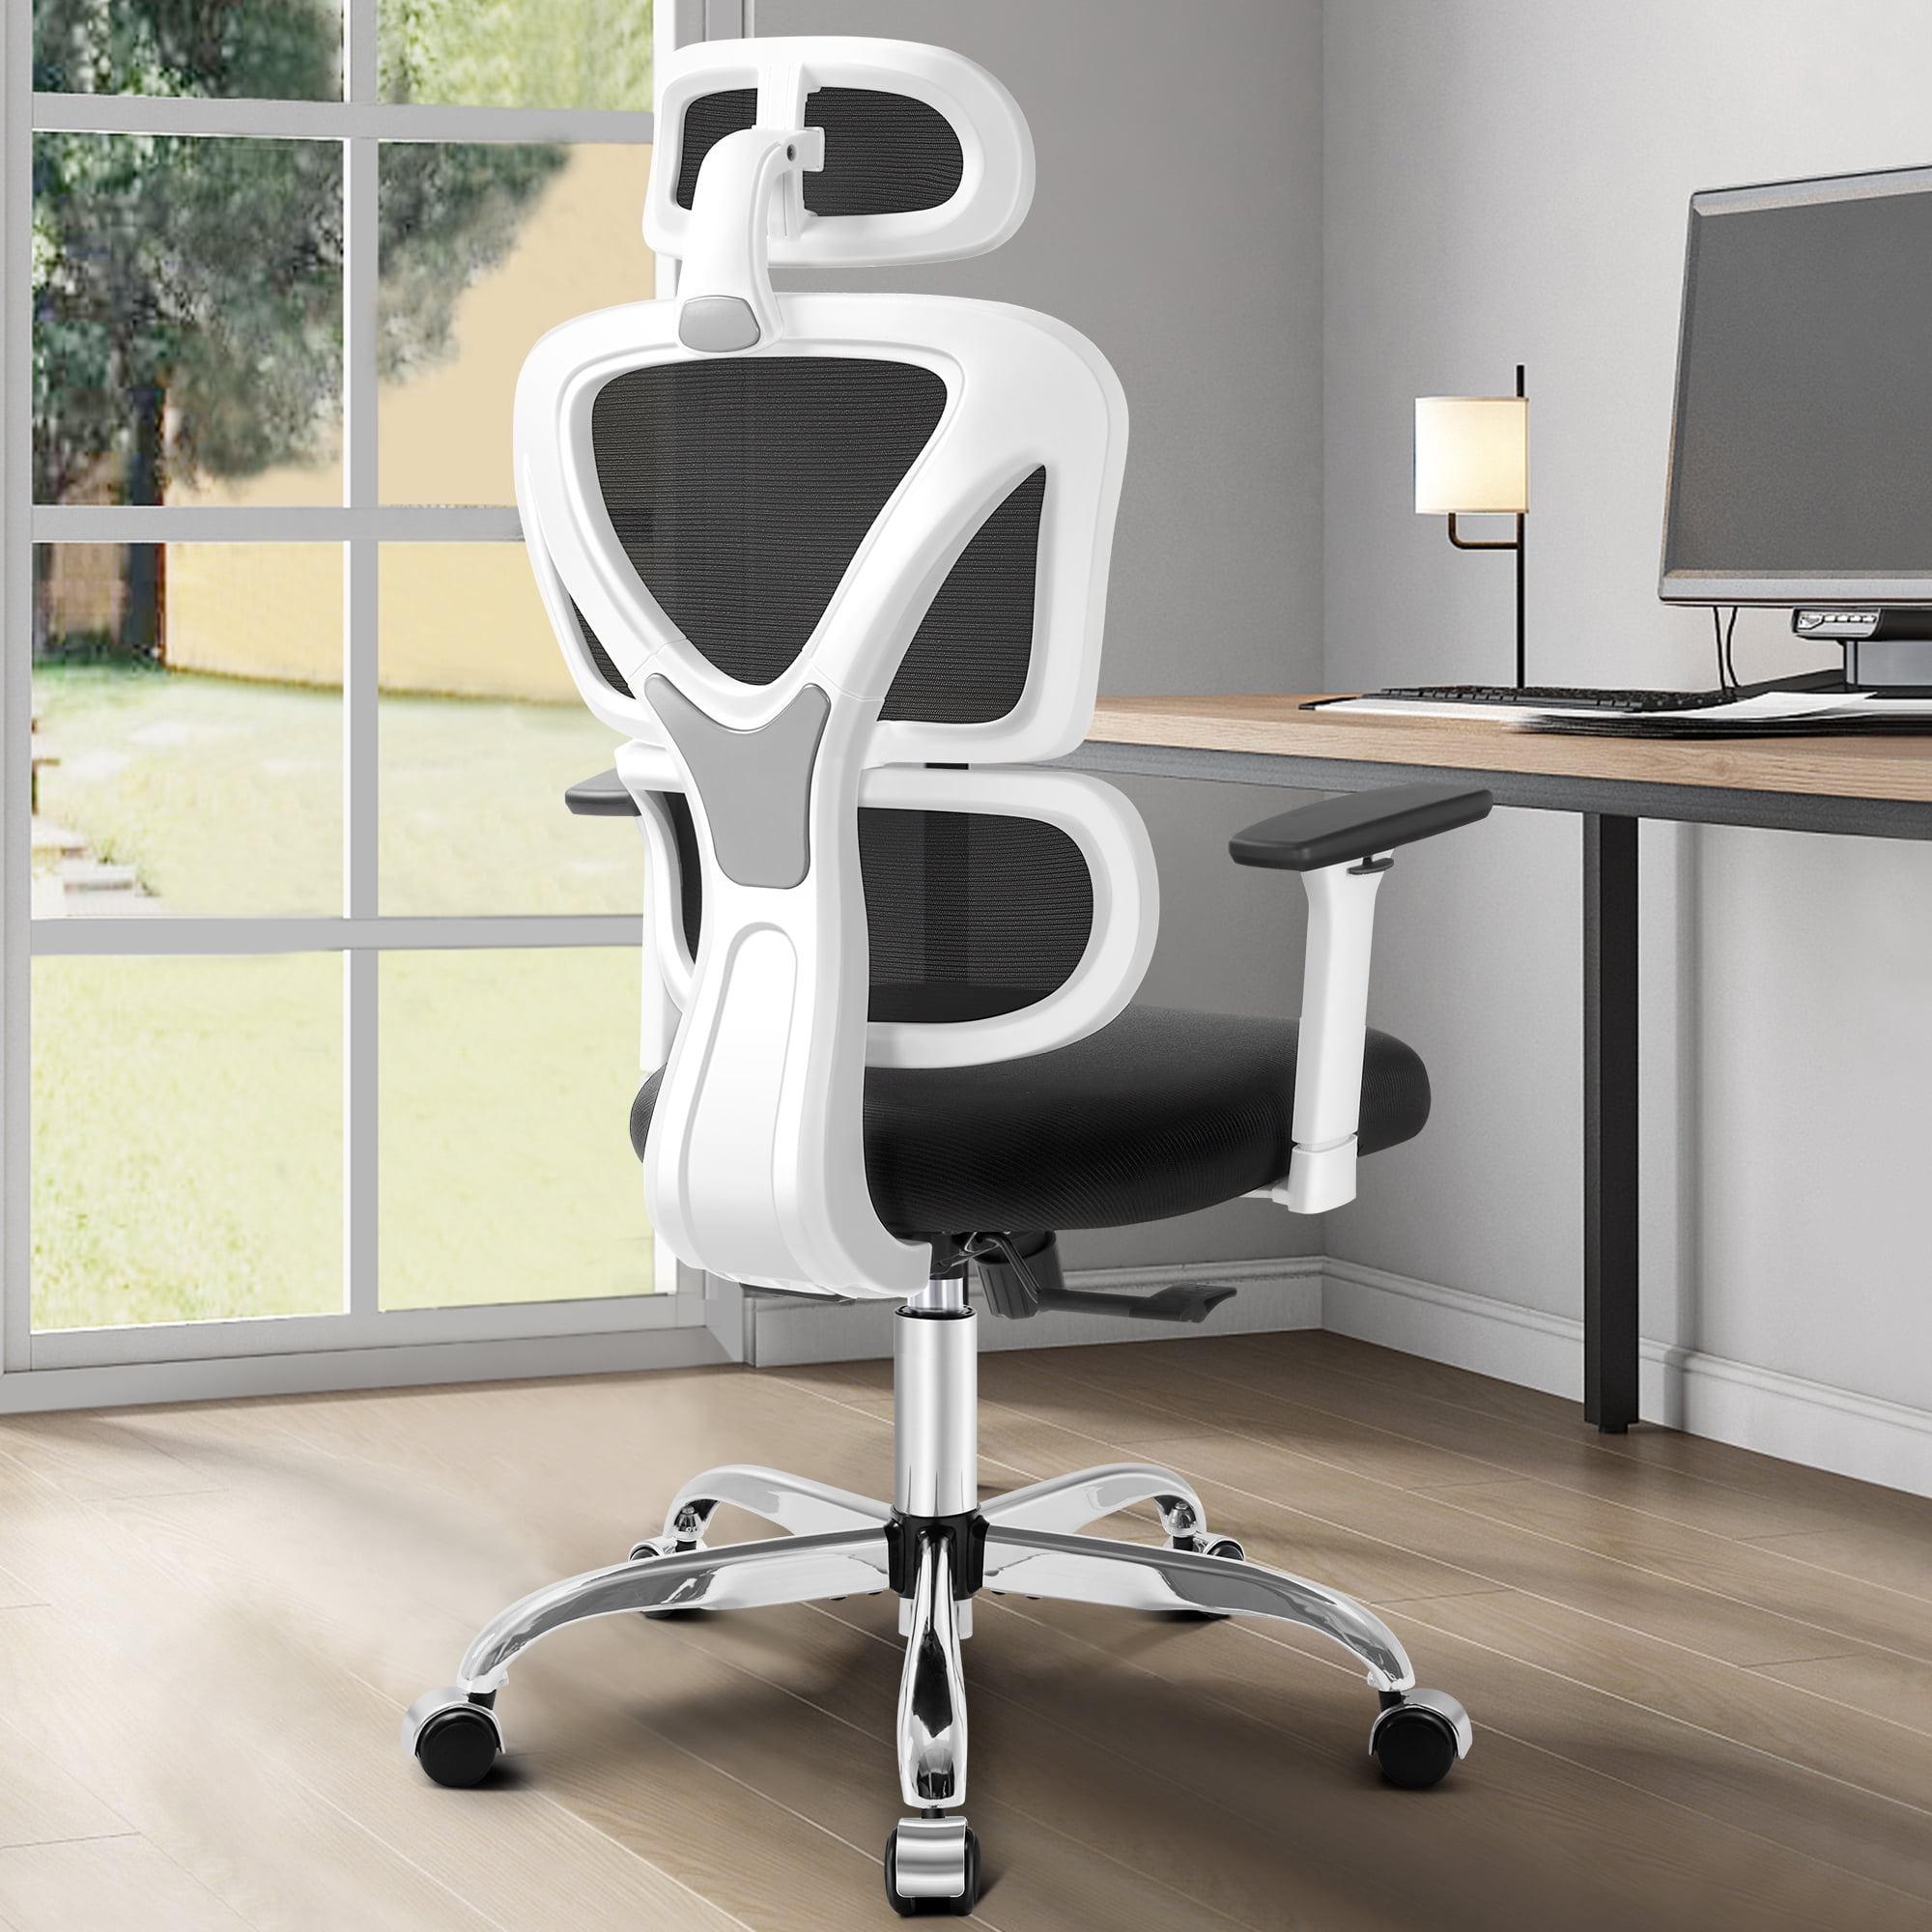 KERDOM High Back Ergonomic Office Chair - Breathable Mesh Cushion